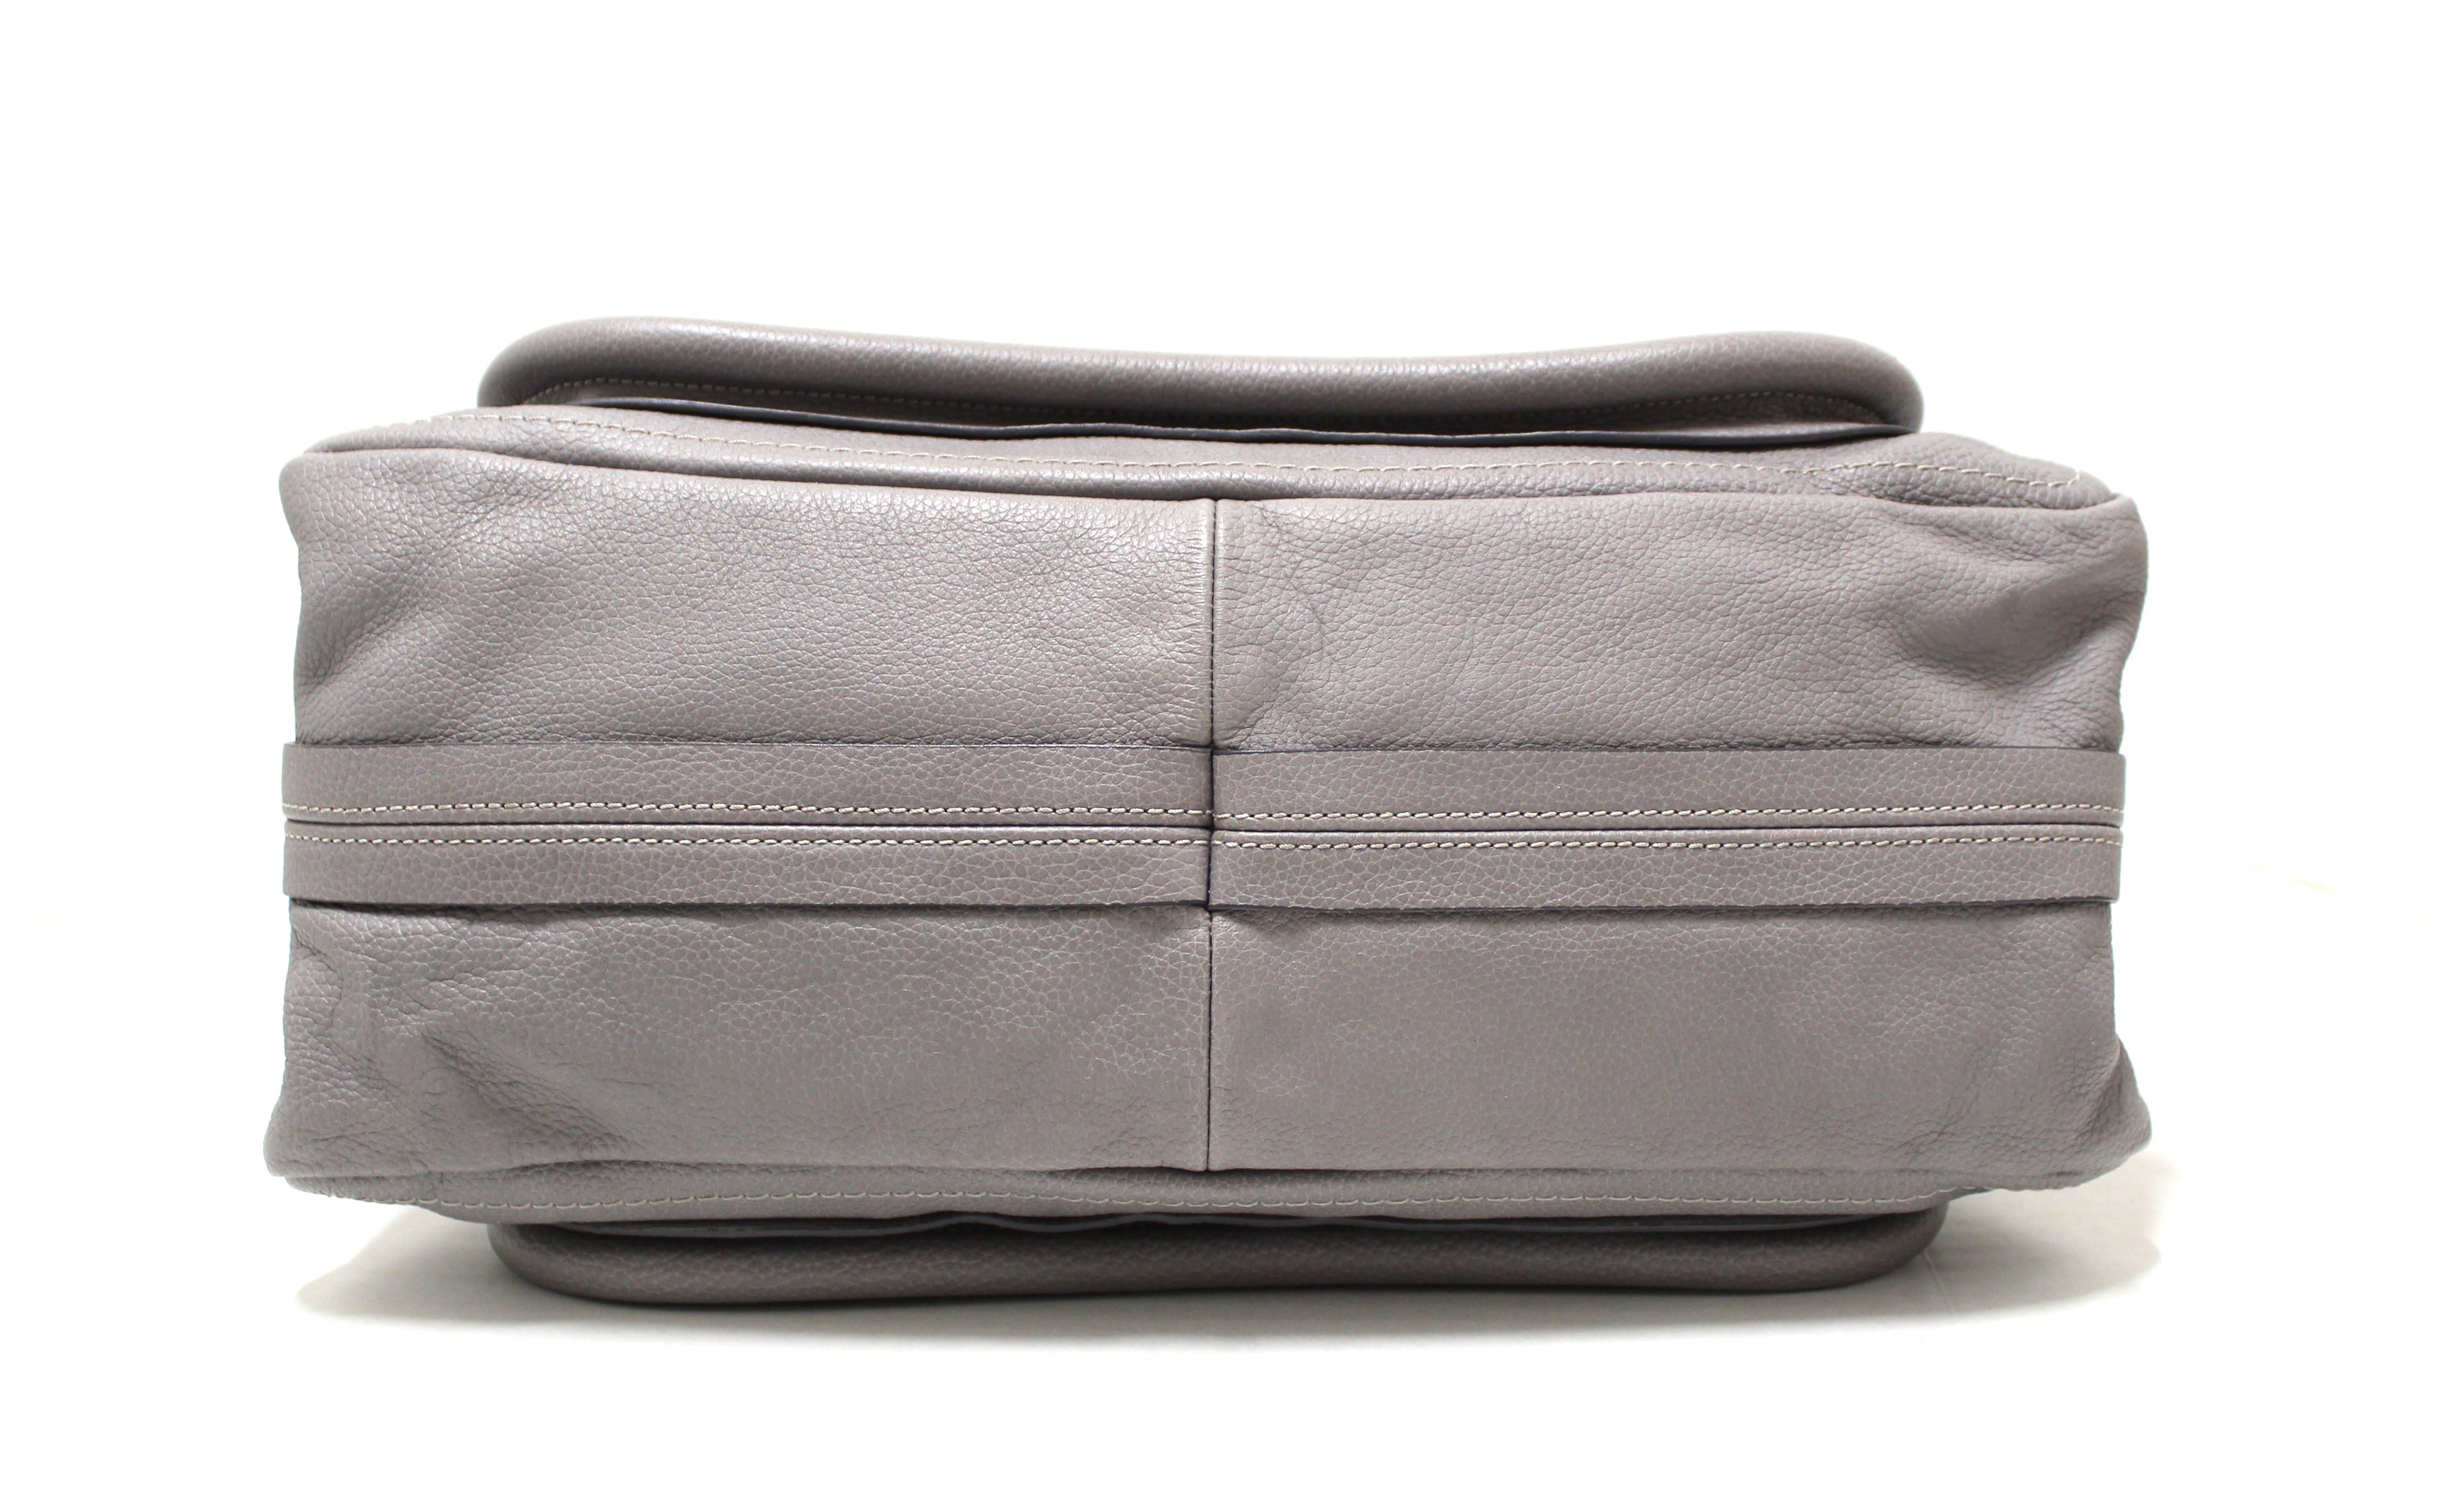 Authentic Chloe Paraty Grey Calfskin Leather Medium Shoulder Bag